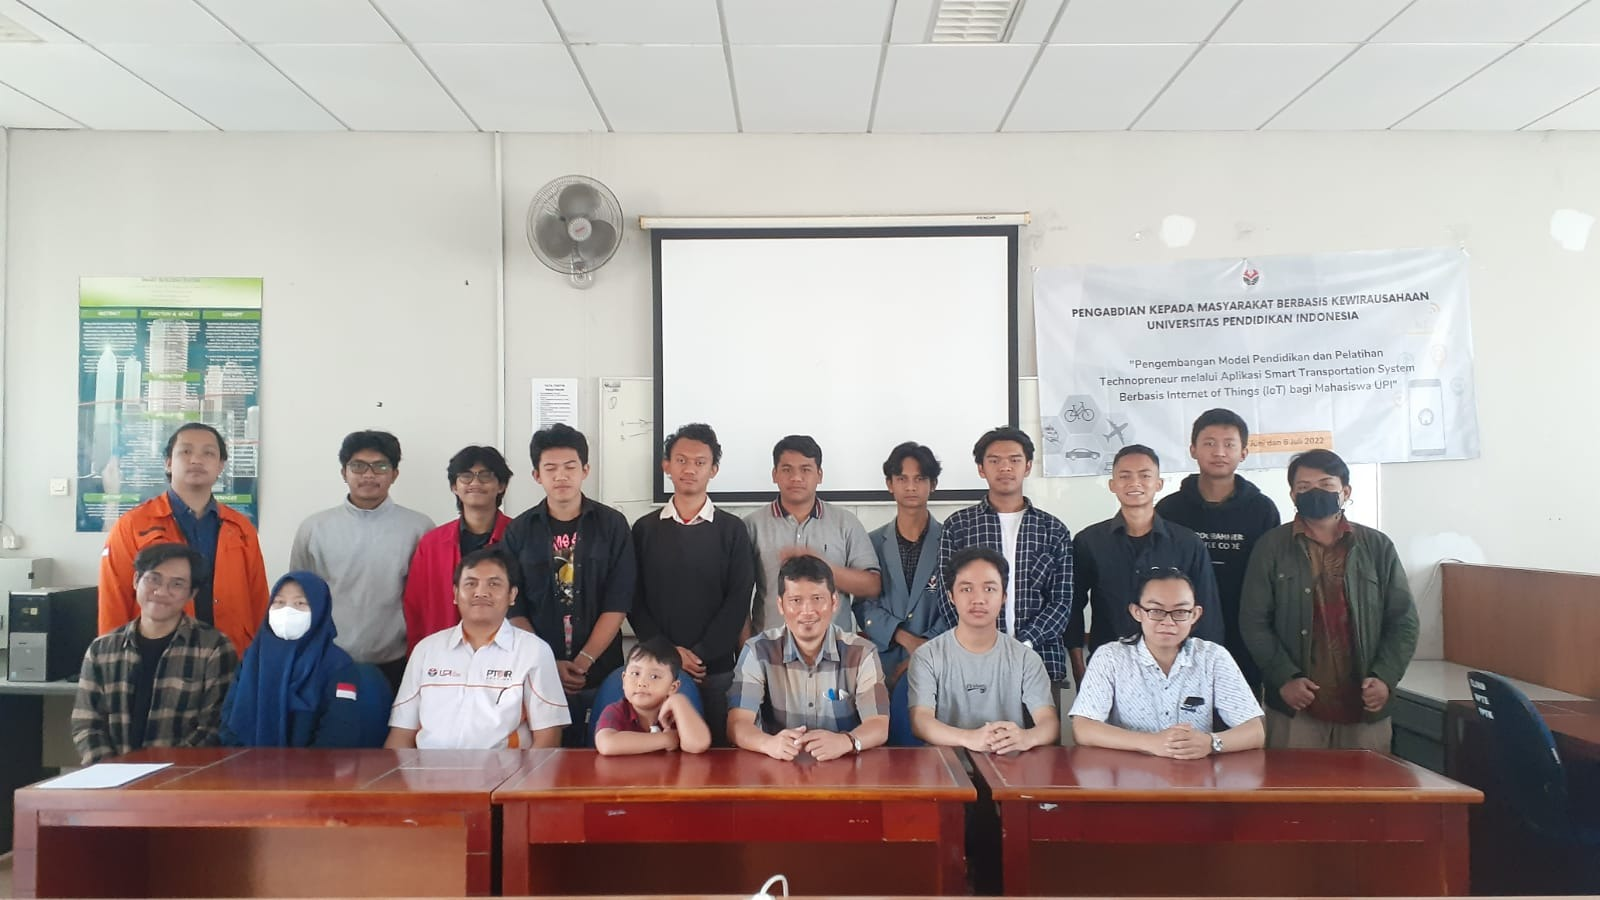 PKM DPTE FPTK UPI Team Held Technoprenuer Training through the Internet of Things (IoT)-Based Smart Transportation System Application for UPI Students